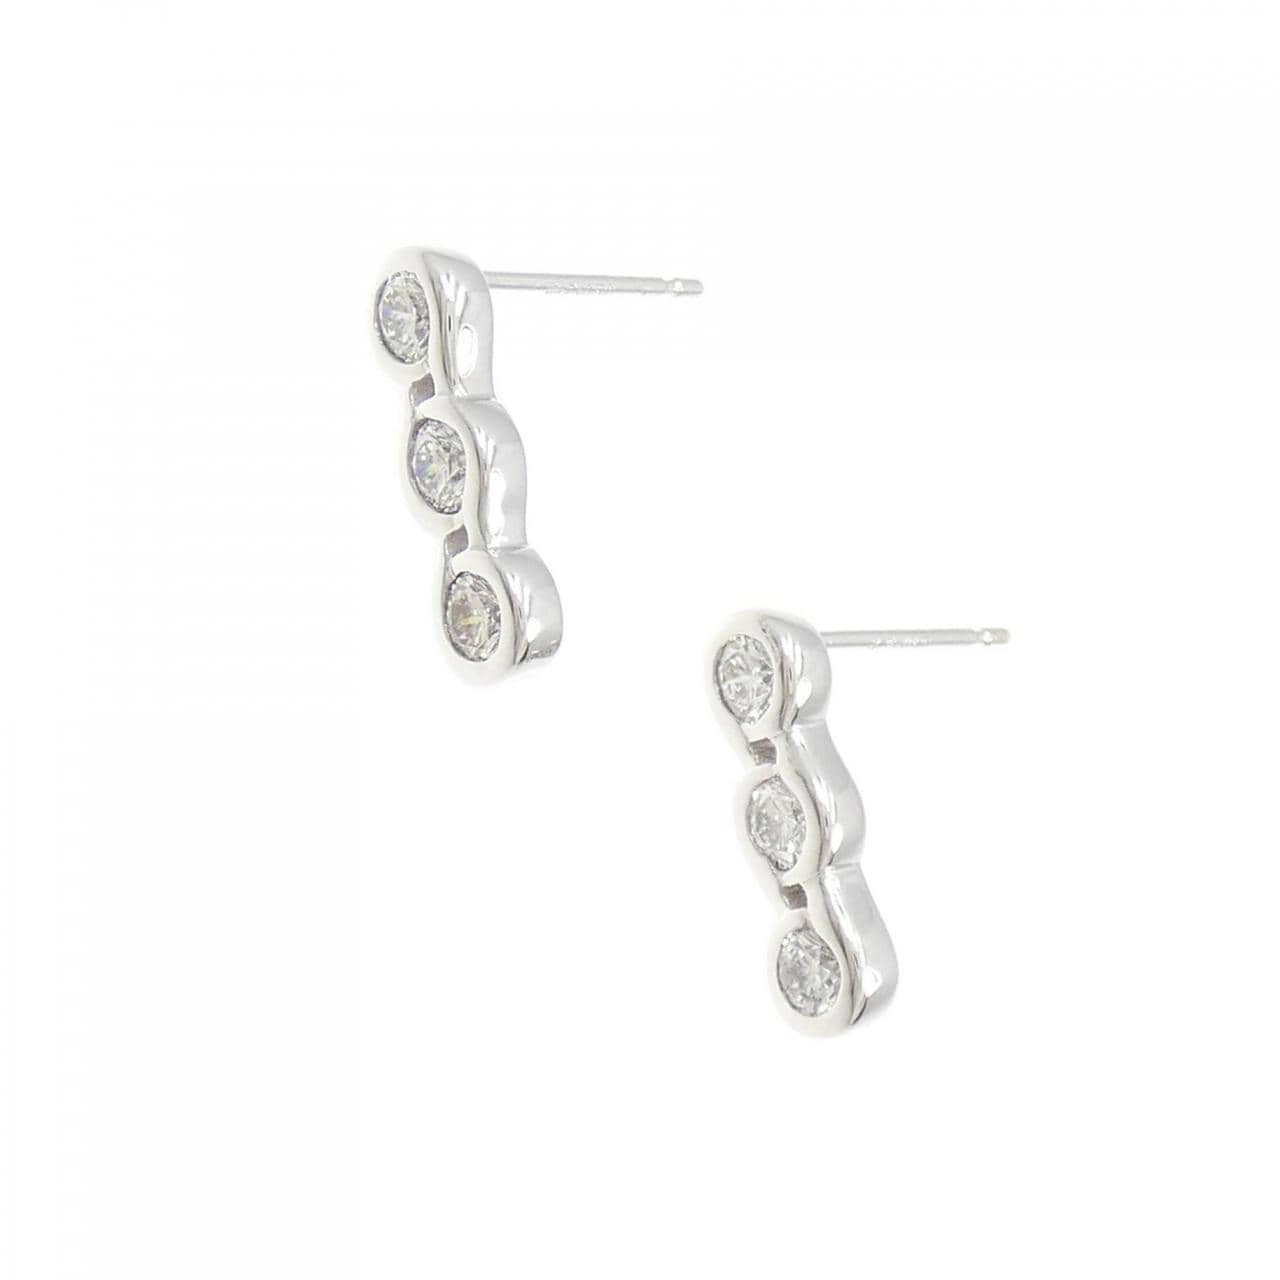 K18WG/PT Diamond earrings 0.62CT